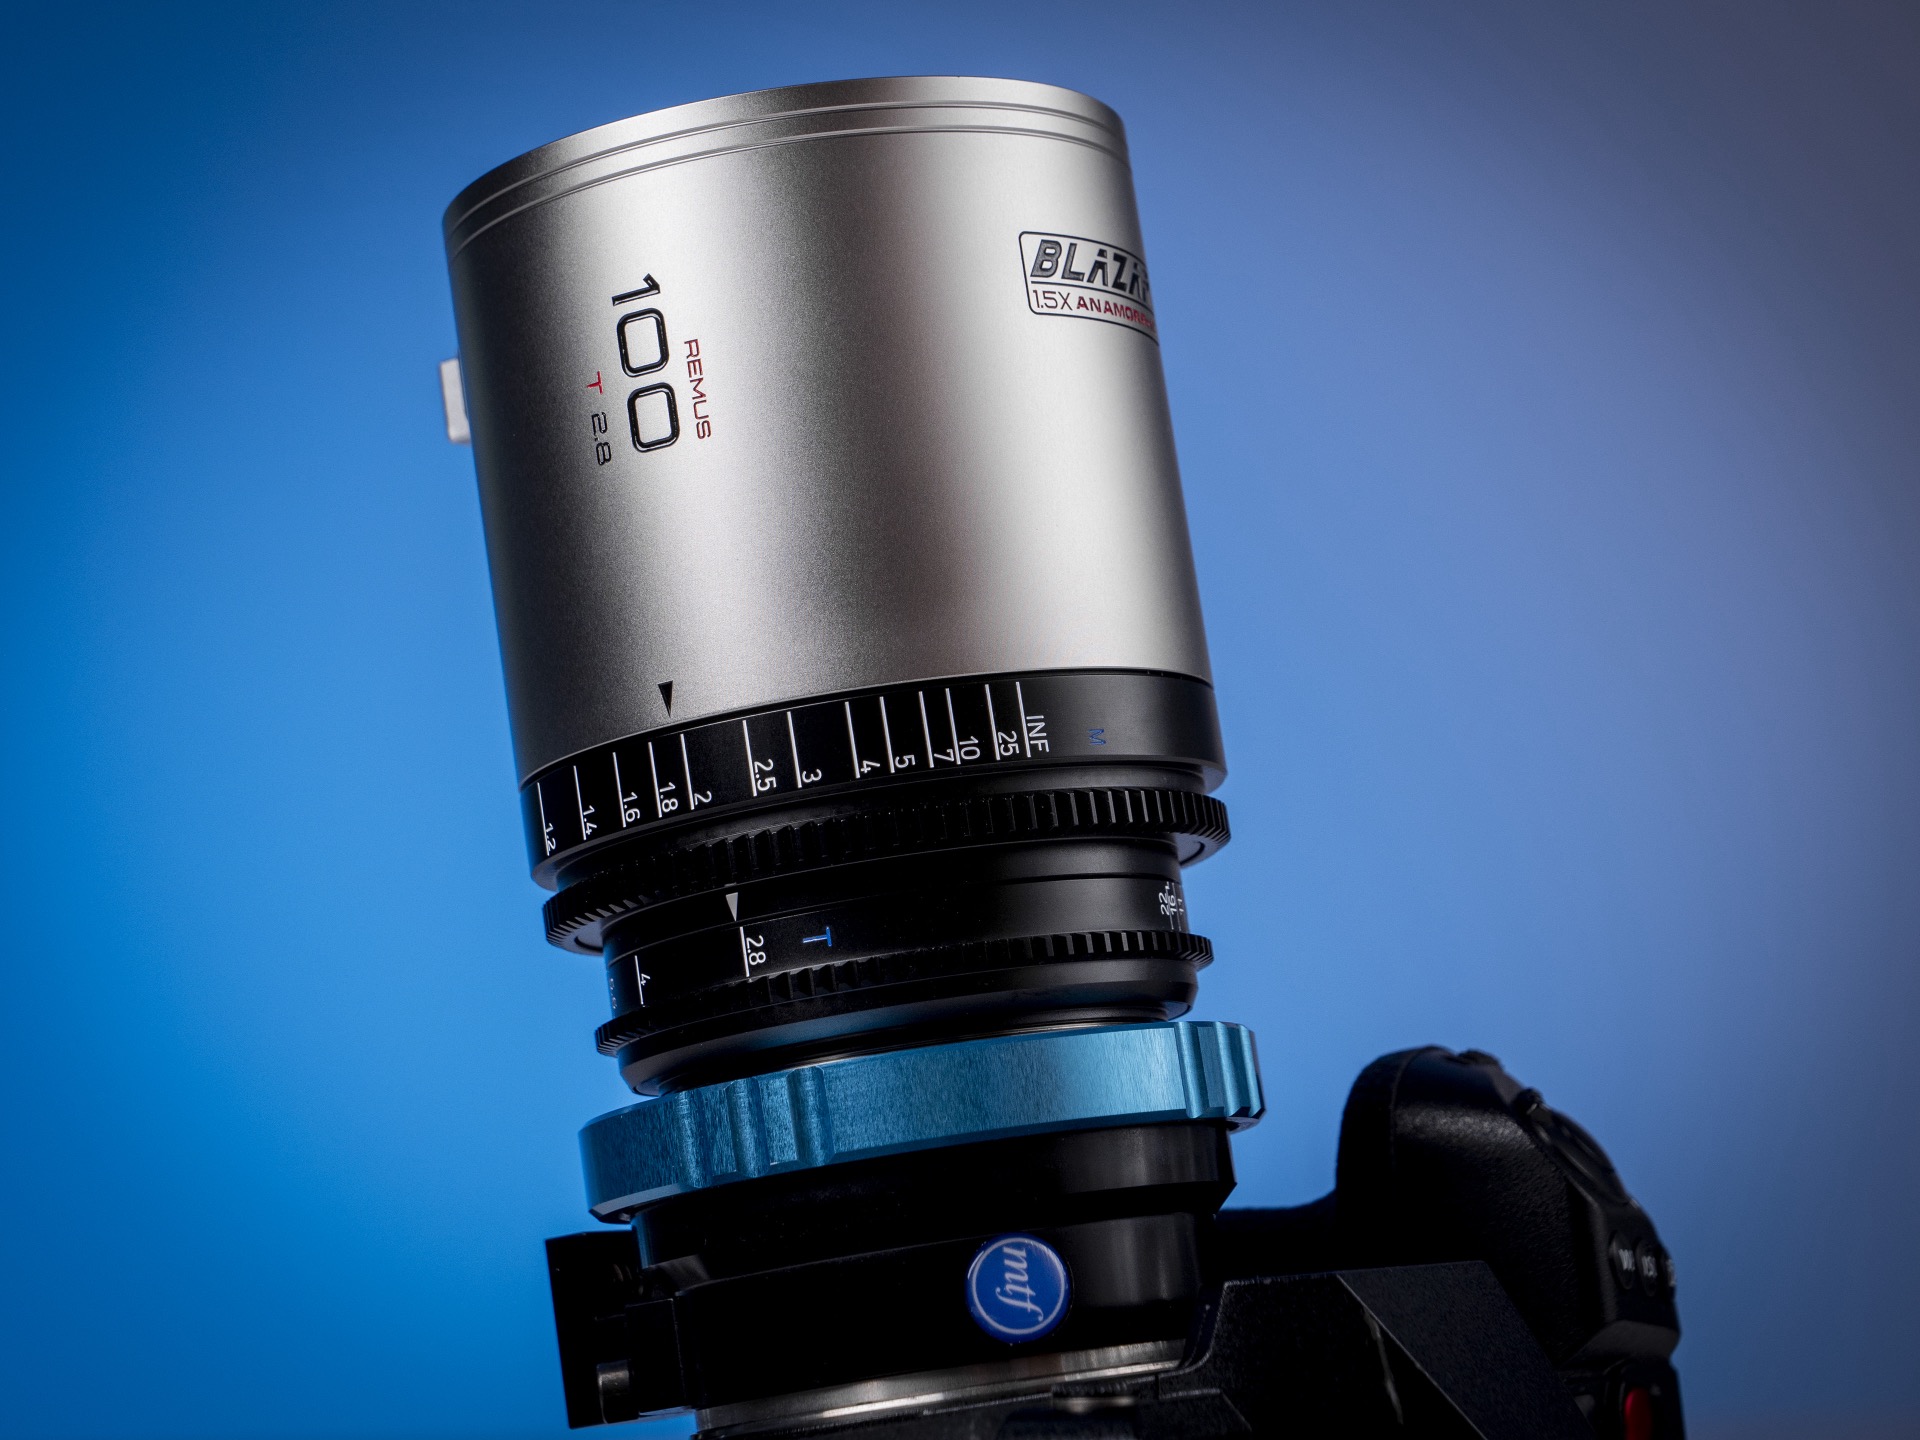 Review: Blazar Remus 1.5x anamorphic lenses 75